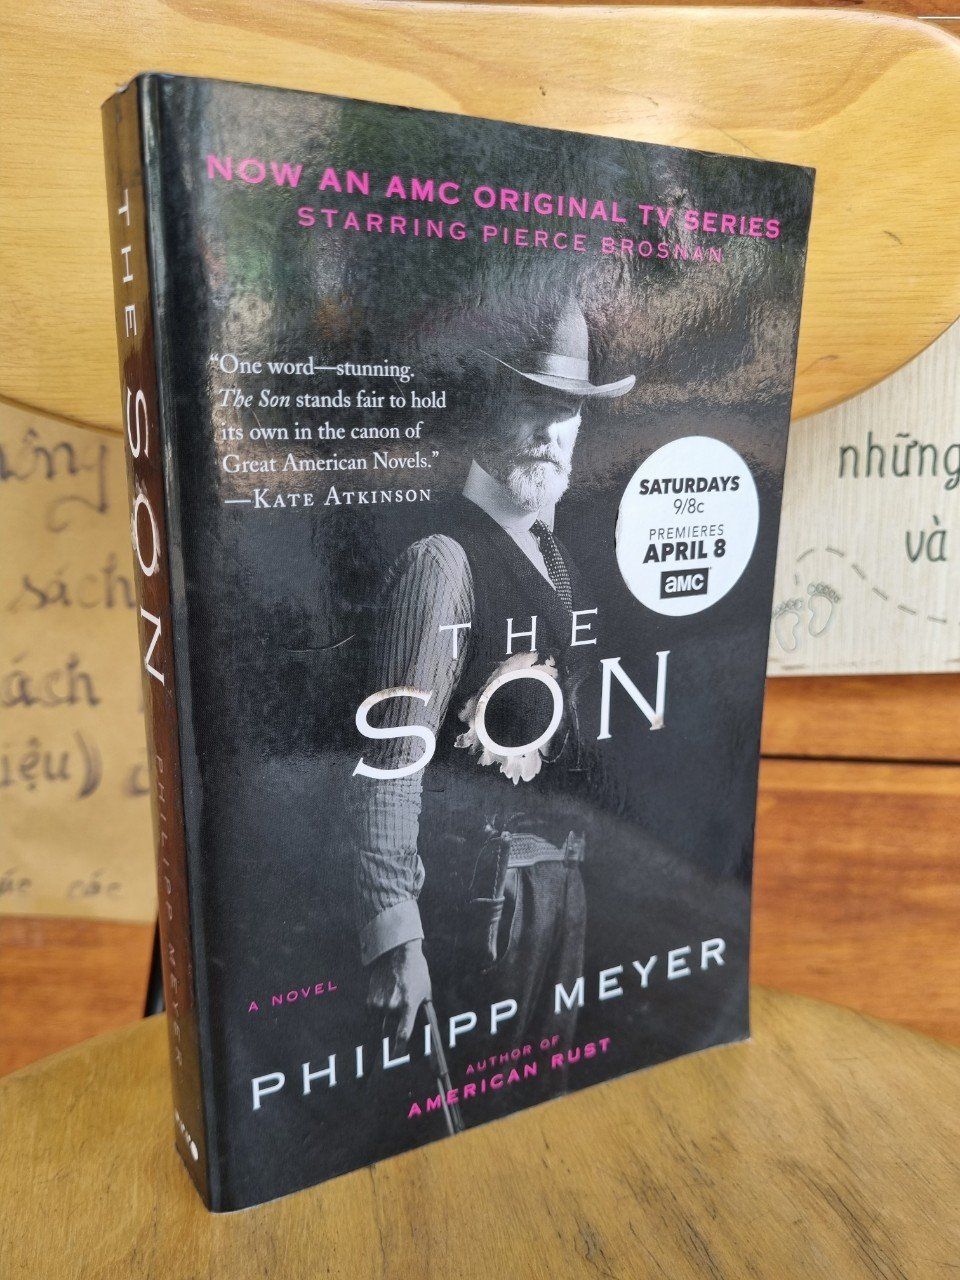  THE SON (A NOVEL) - PHILLIP MEYER 